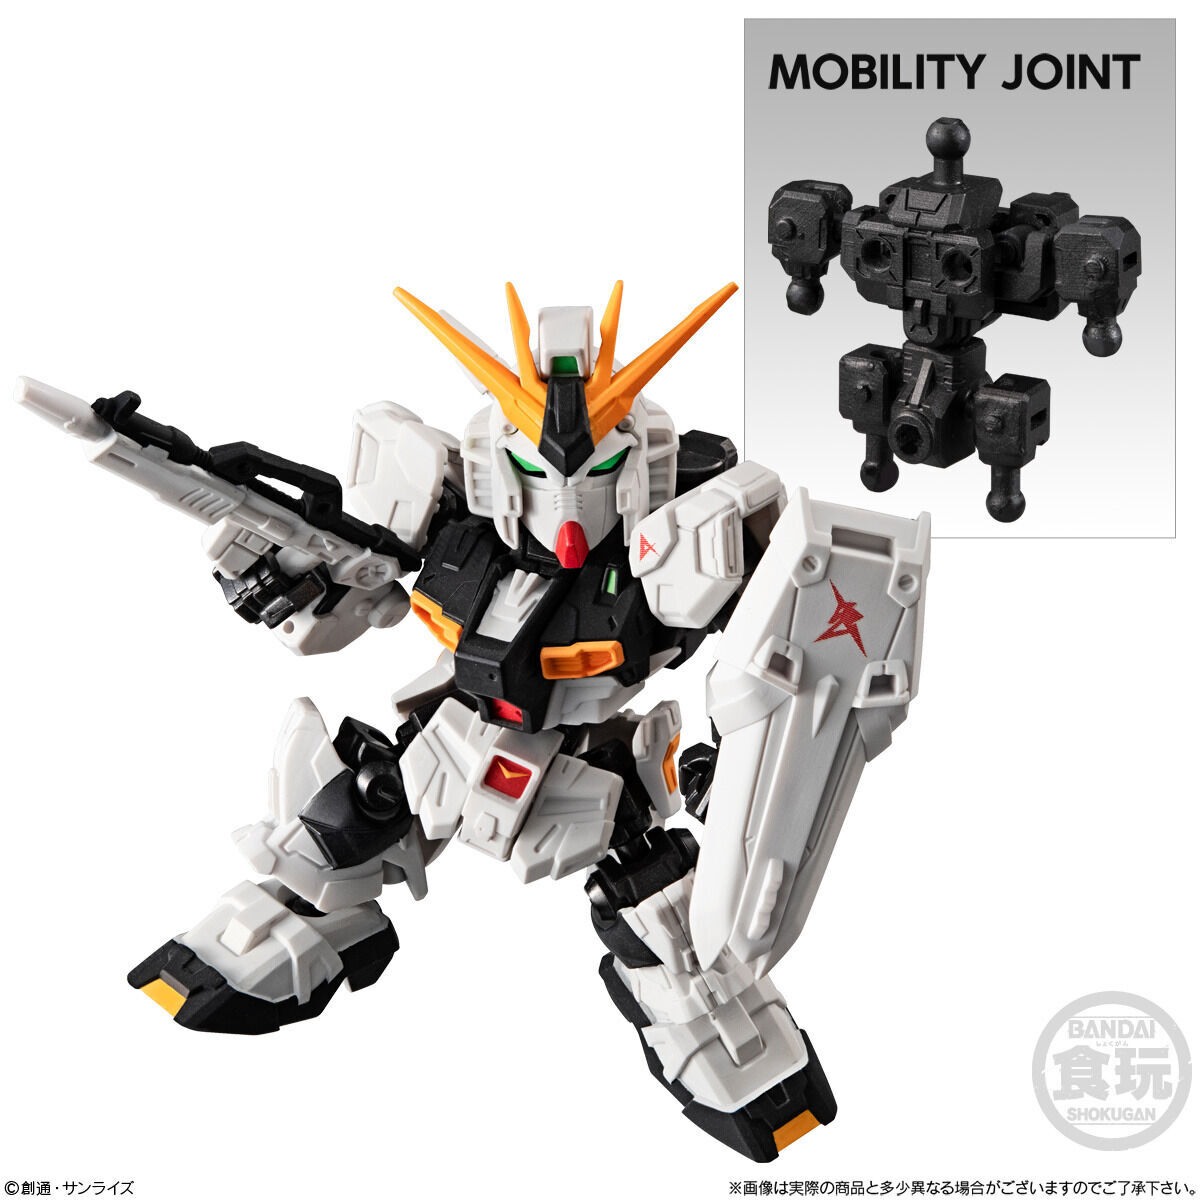 Mobility Joint Gundam Vol.02